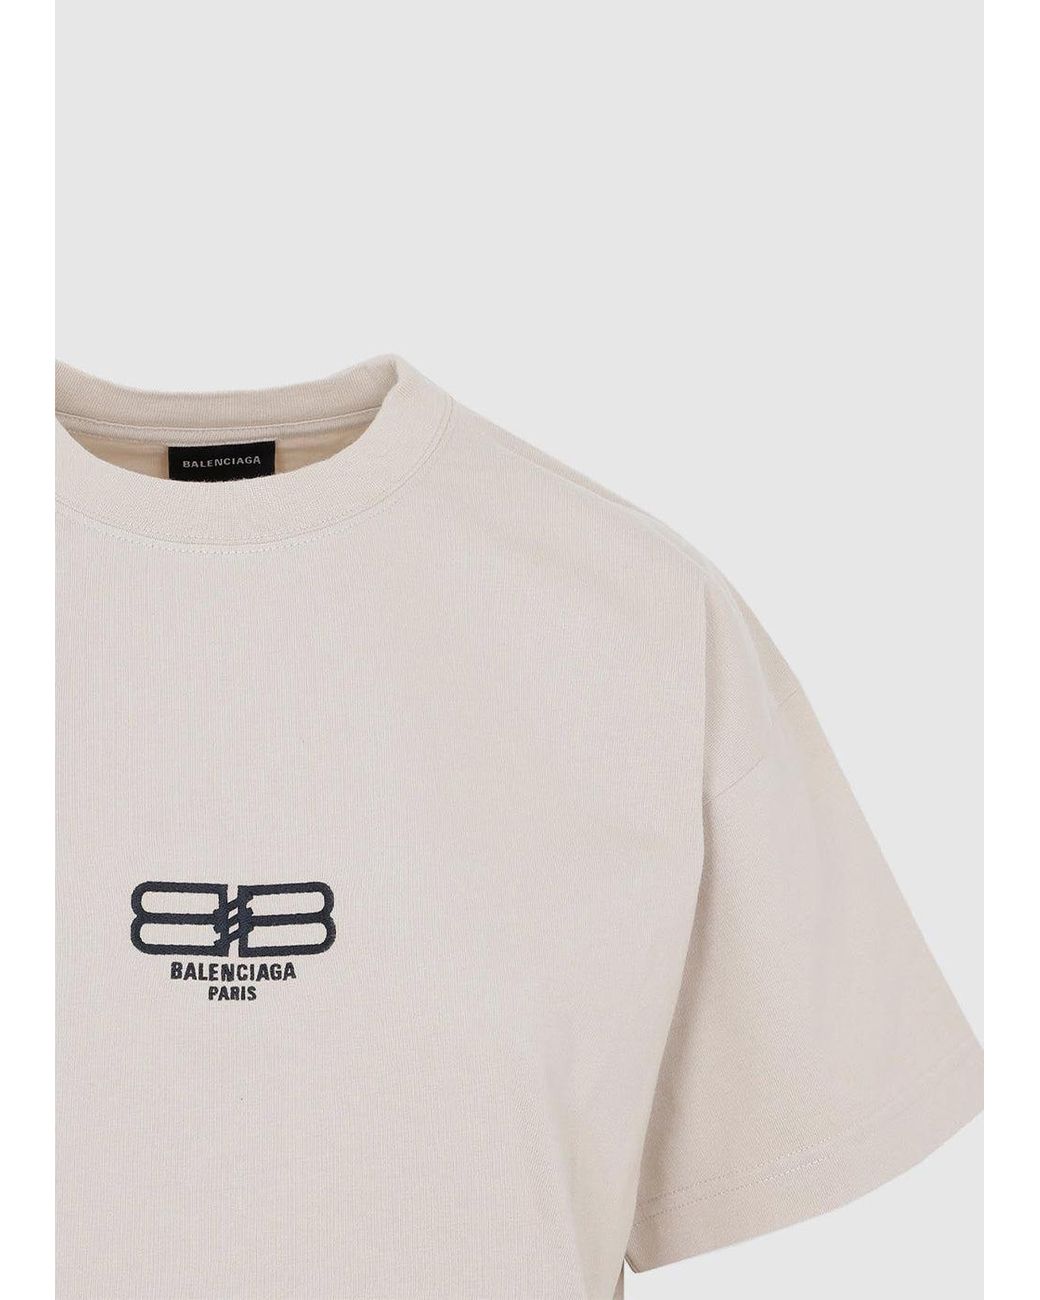 Balenciaga Mens BB Monogram Sport Shirt  Bergdorf Goodman